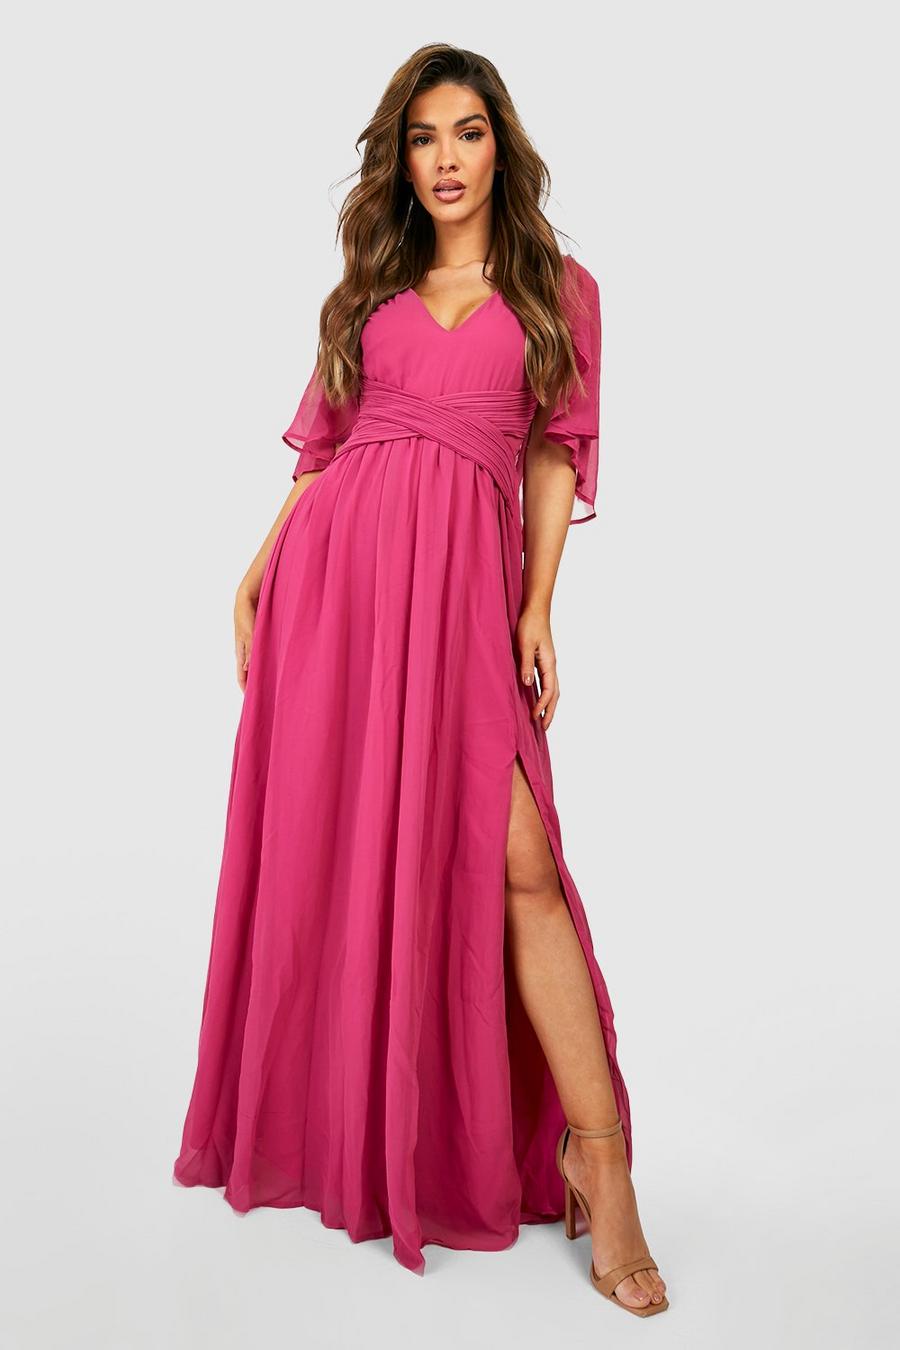 Magenta rosa Bridesmaid Chiffon Cape Maxi Dress 